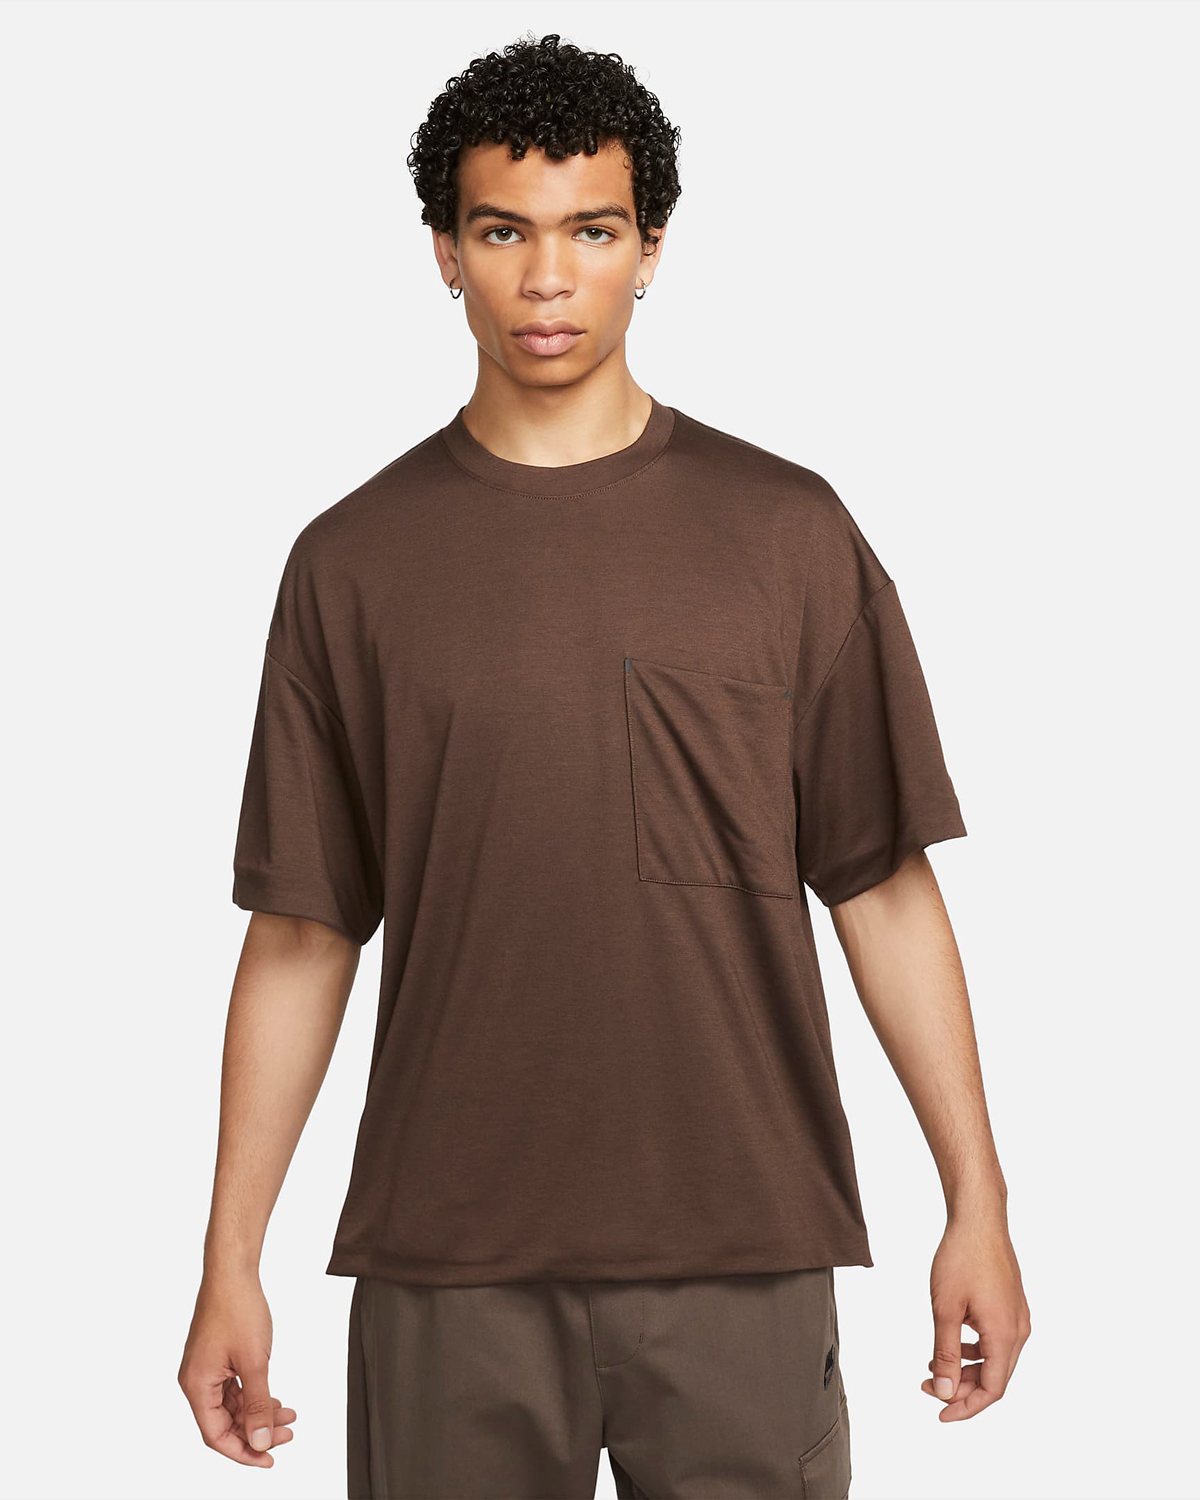 Nike-Sportswear-Tech-Pack-T-Shirt-Baroque-Brown-1